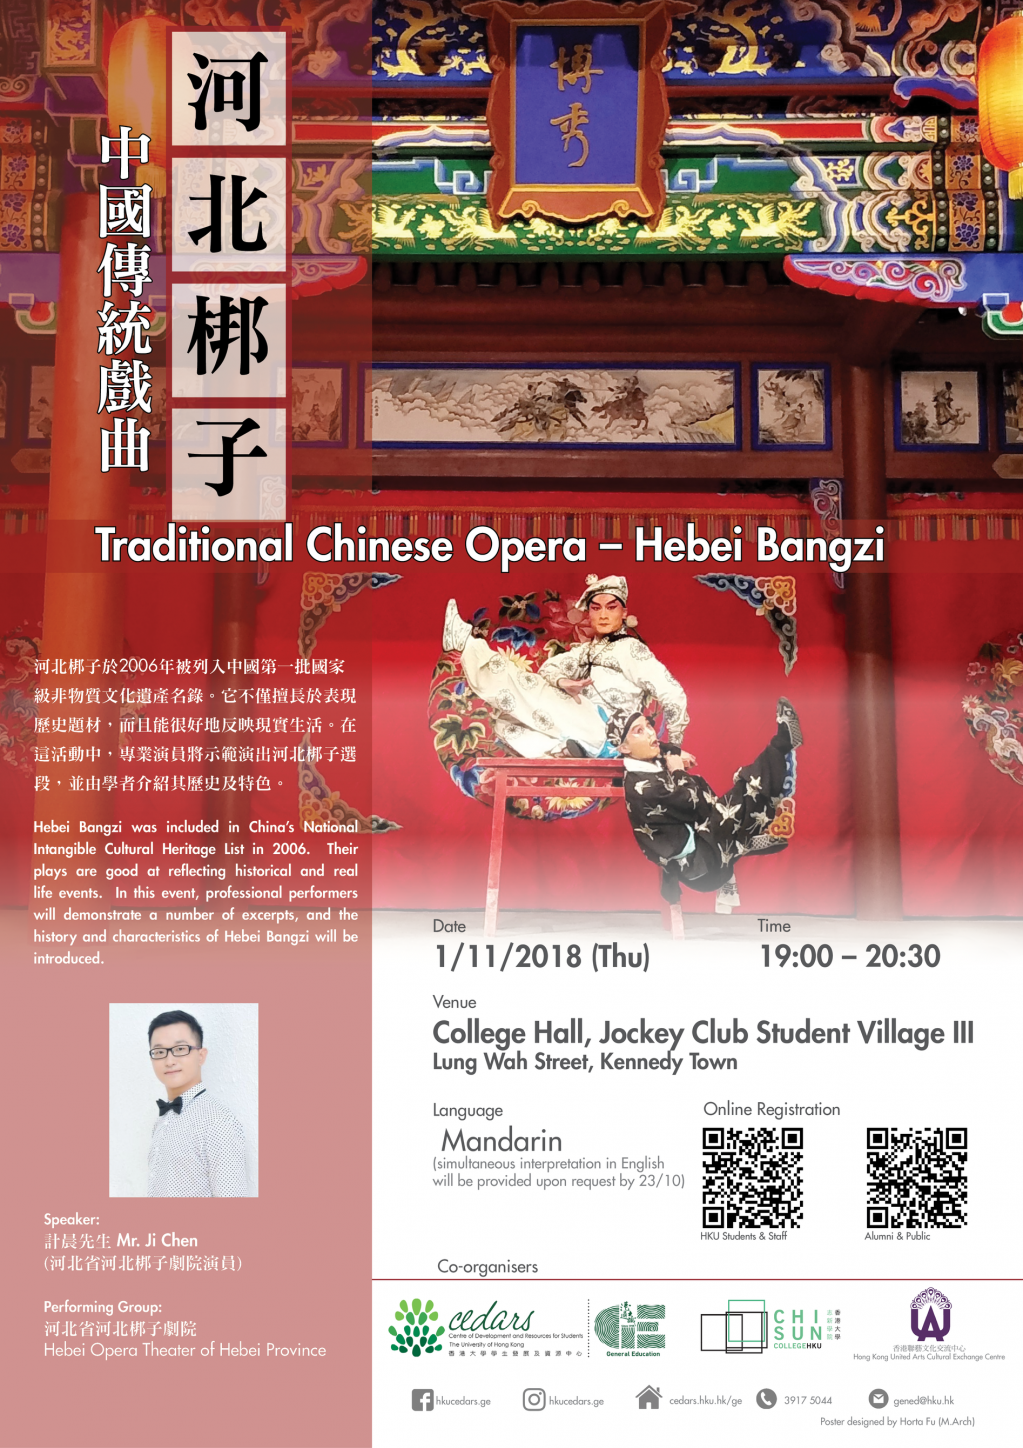 中國傳統戲曲──河北梆子 Traditional Chinese Opera - Hebei Bangzi